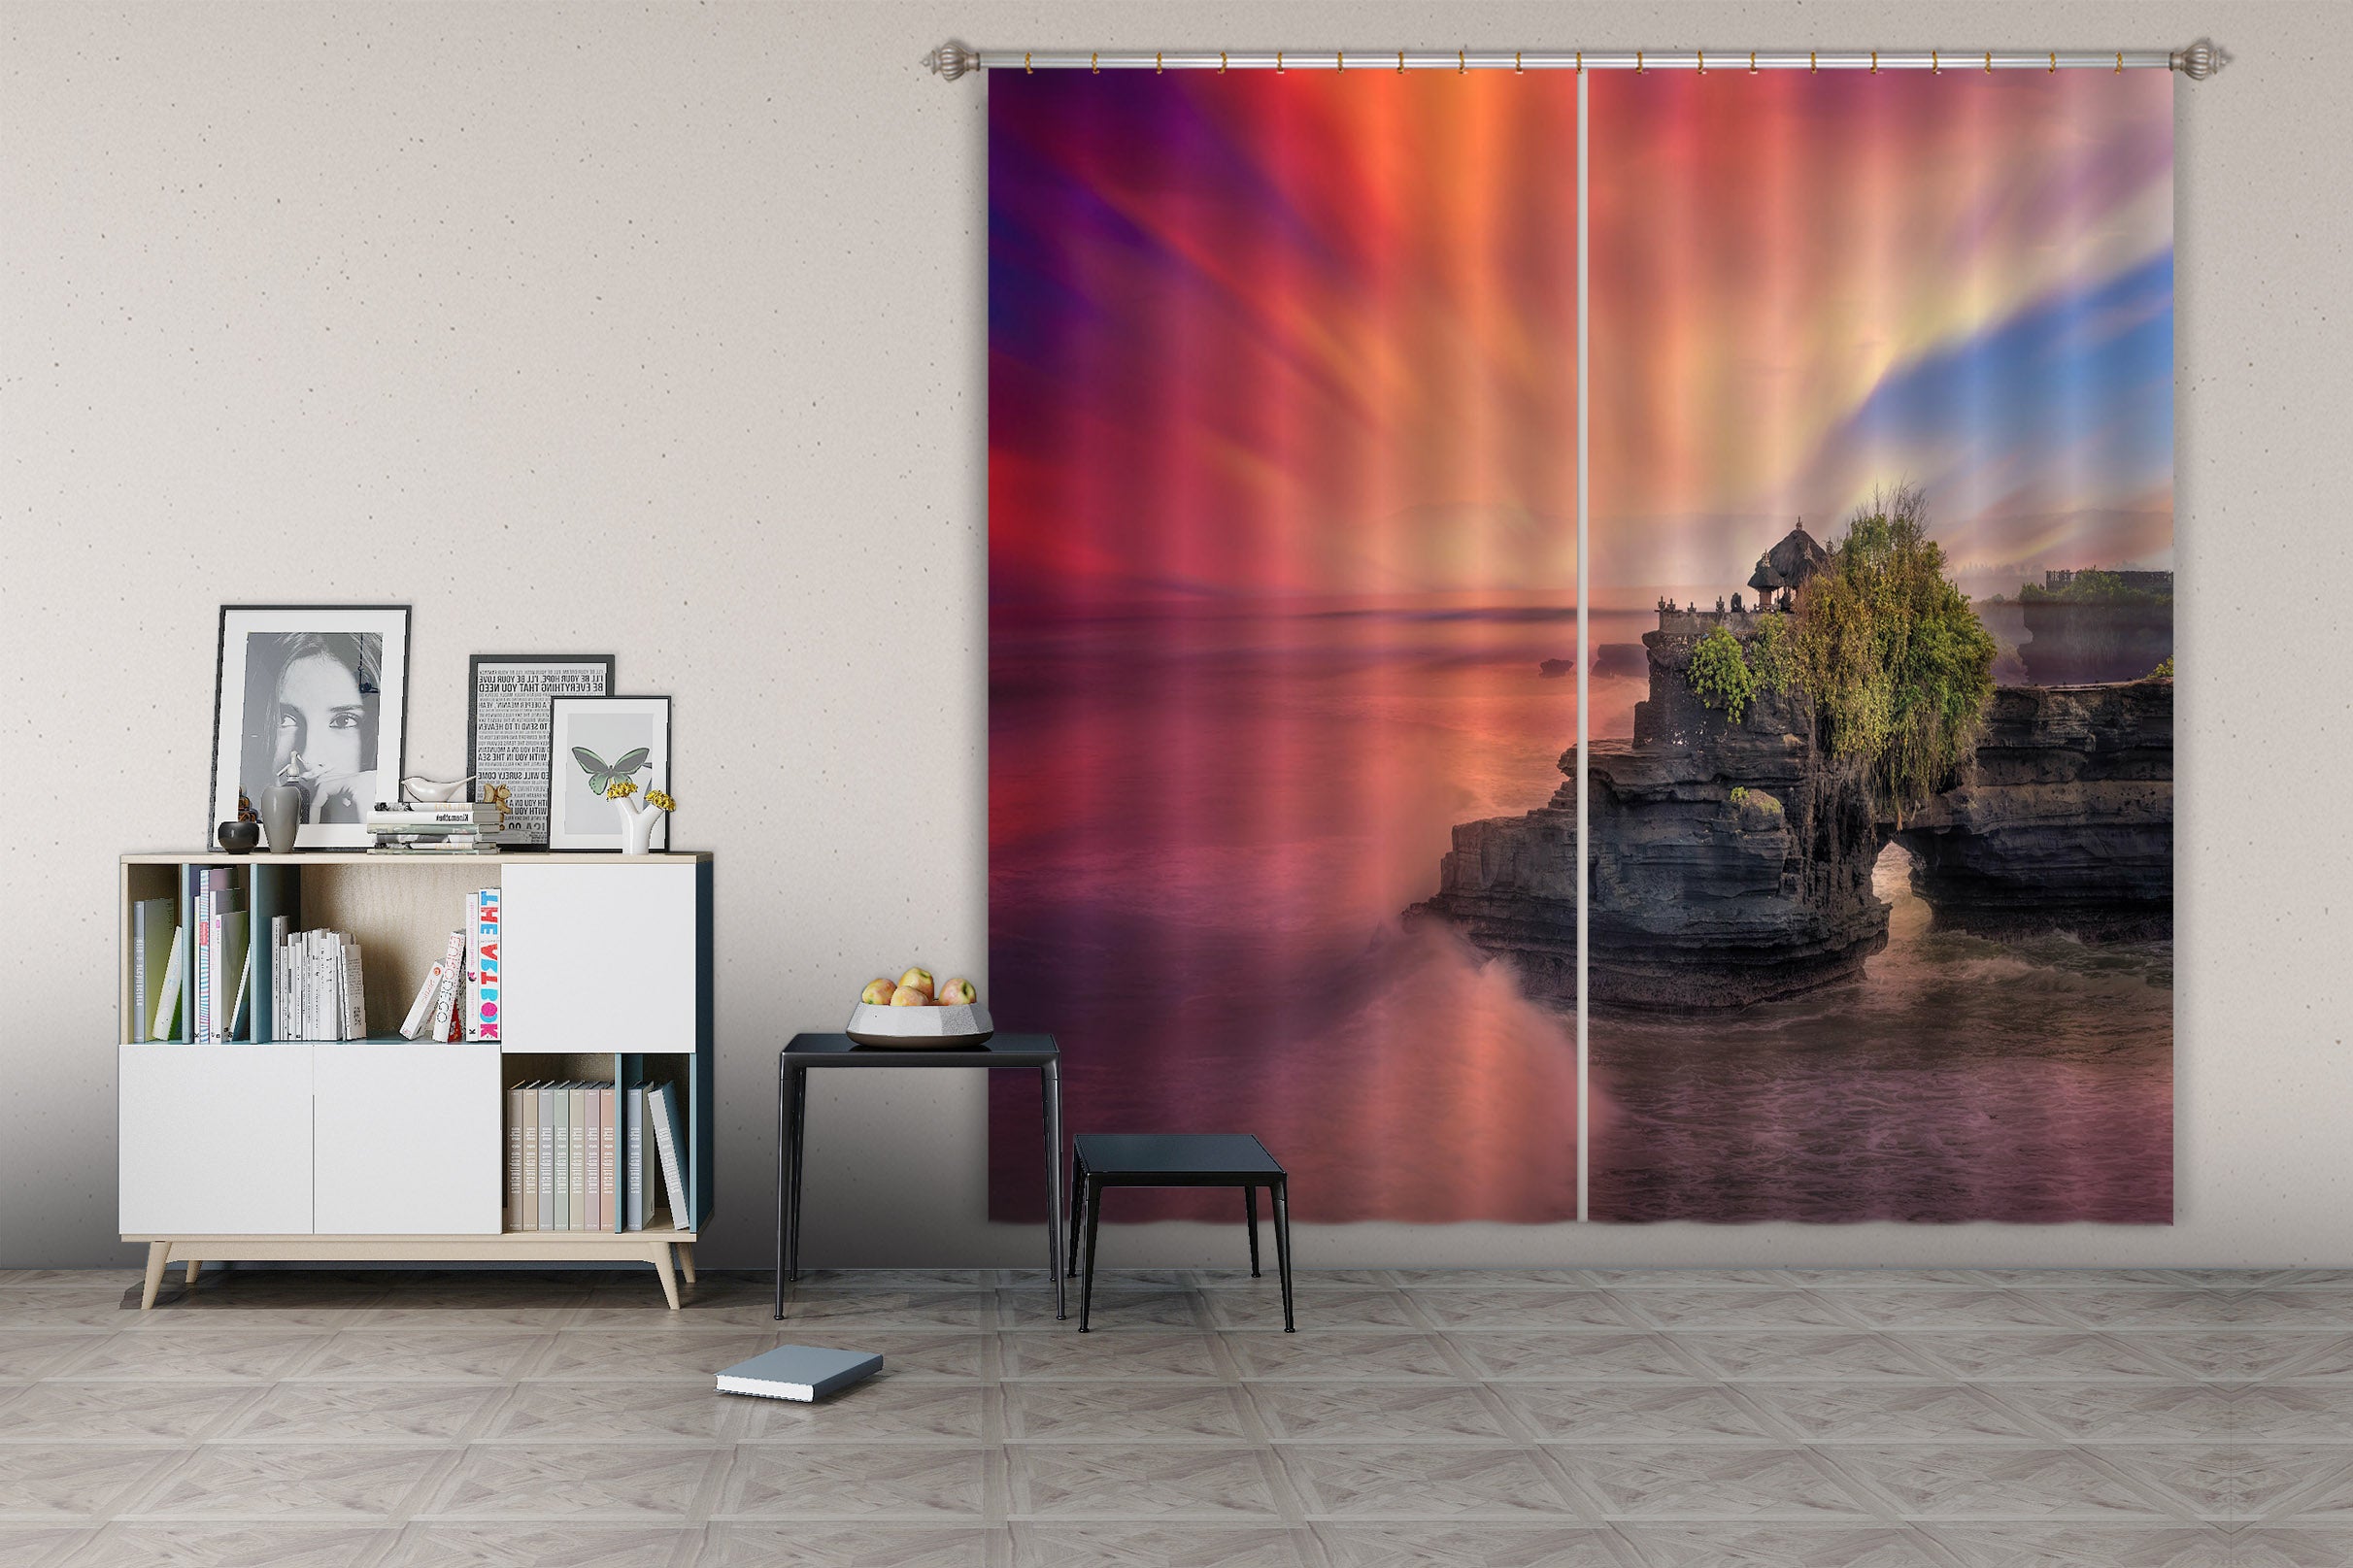 3D Sunset Lake 051 Marco Carmassi Curtain Curtains Drapes